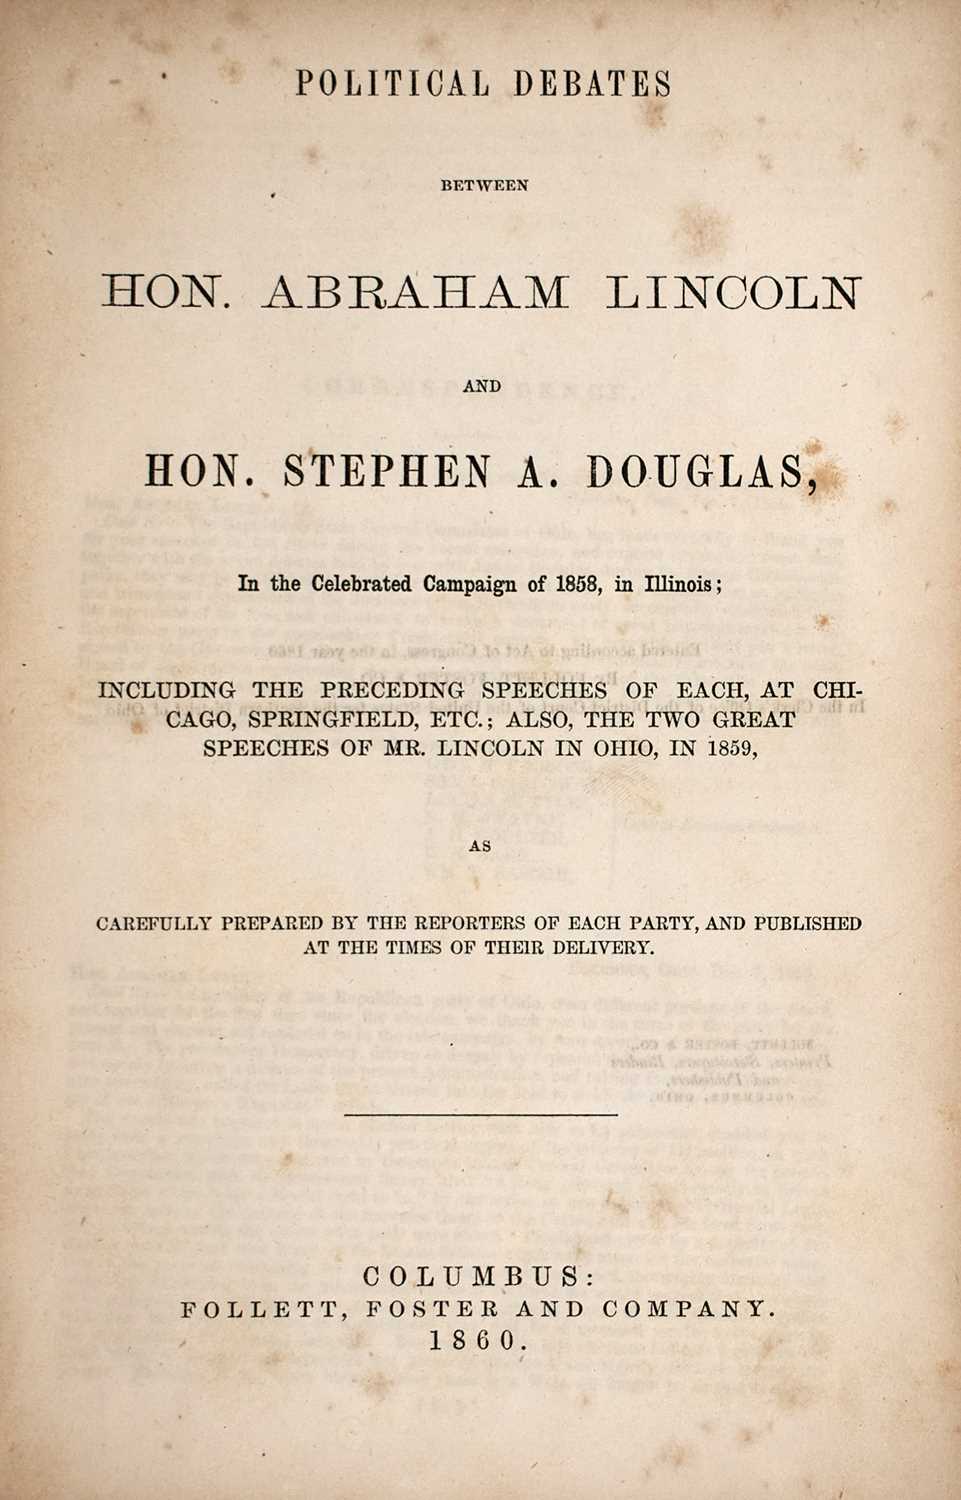 Lot 250 - The Lincoln-Douglas Debates